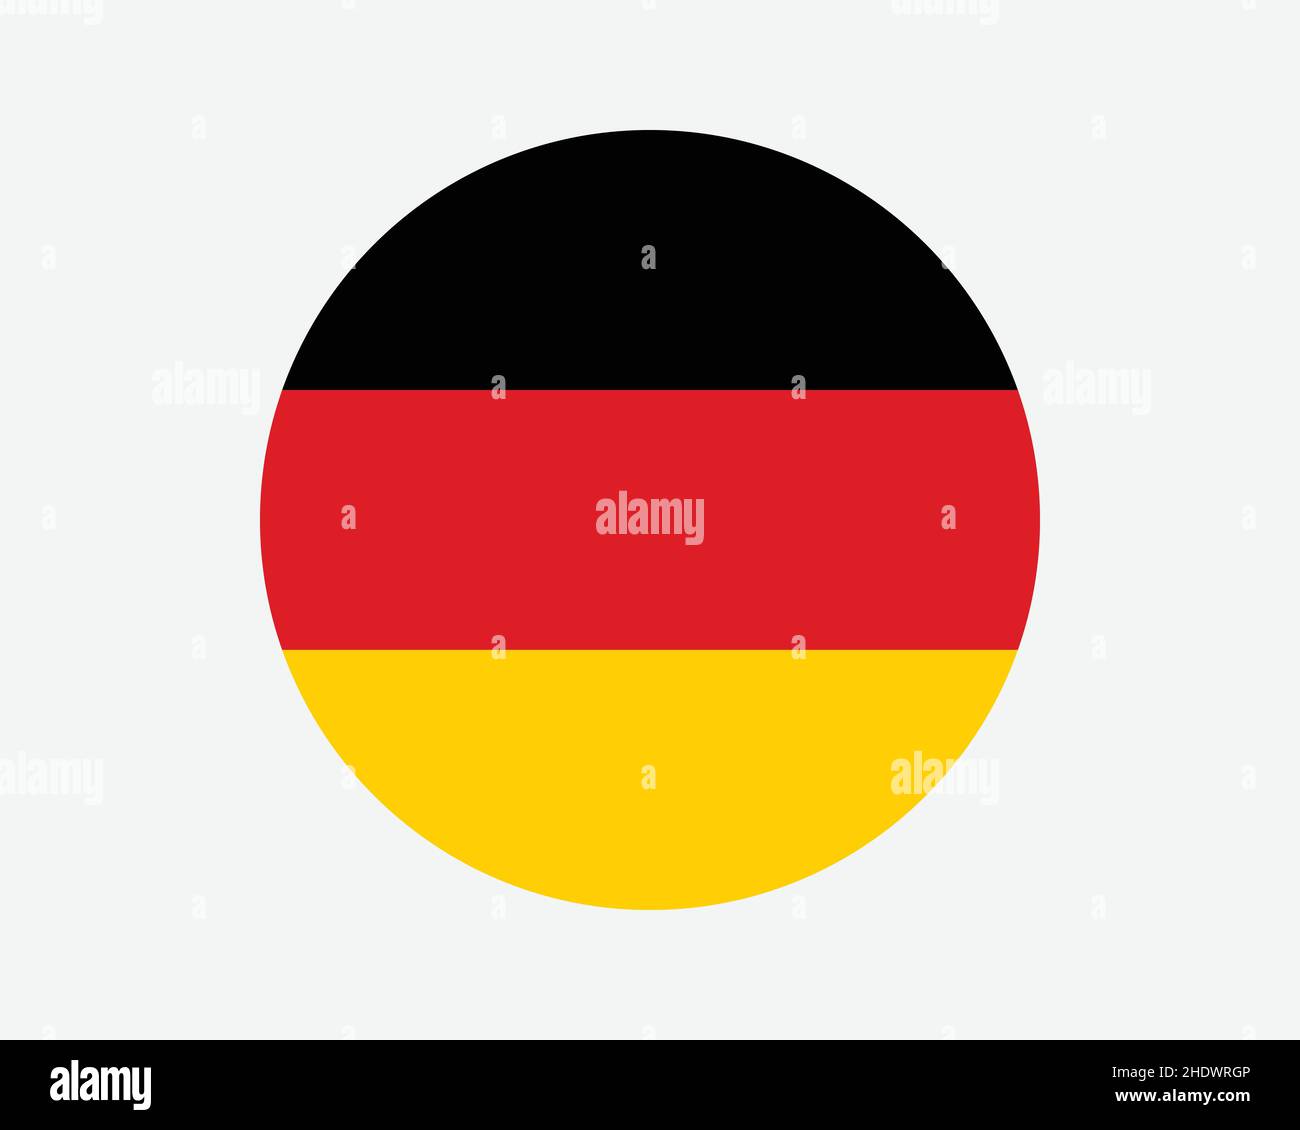 Vecteur Stock deutschland fahne germany flag